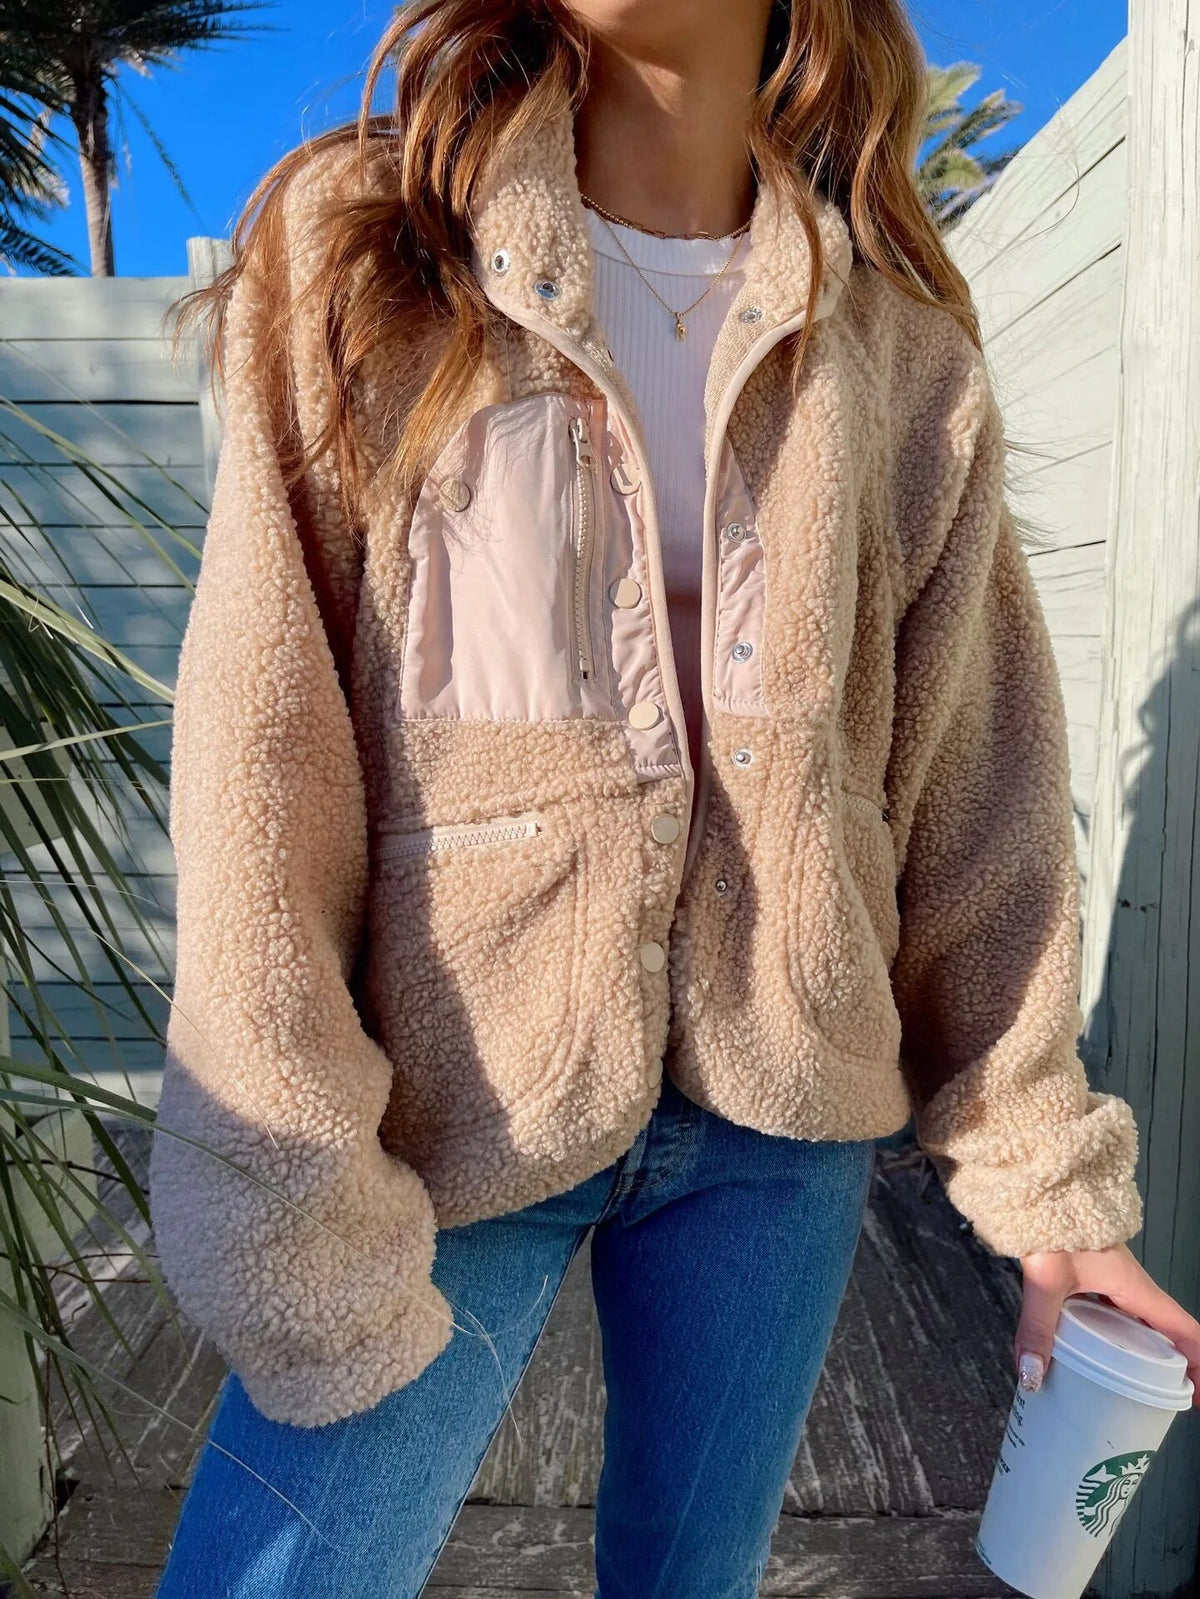 Cozy Days - Polar Fleece Jacket for Women